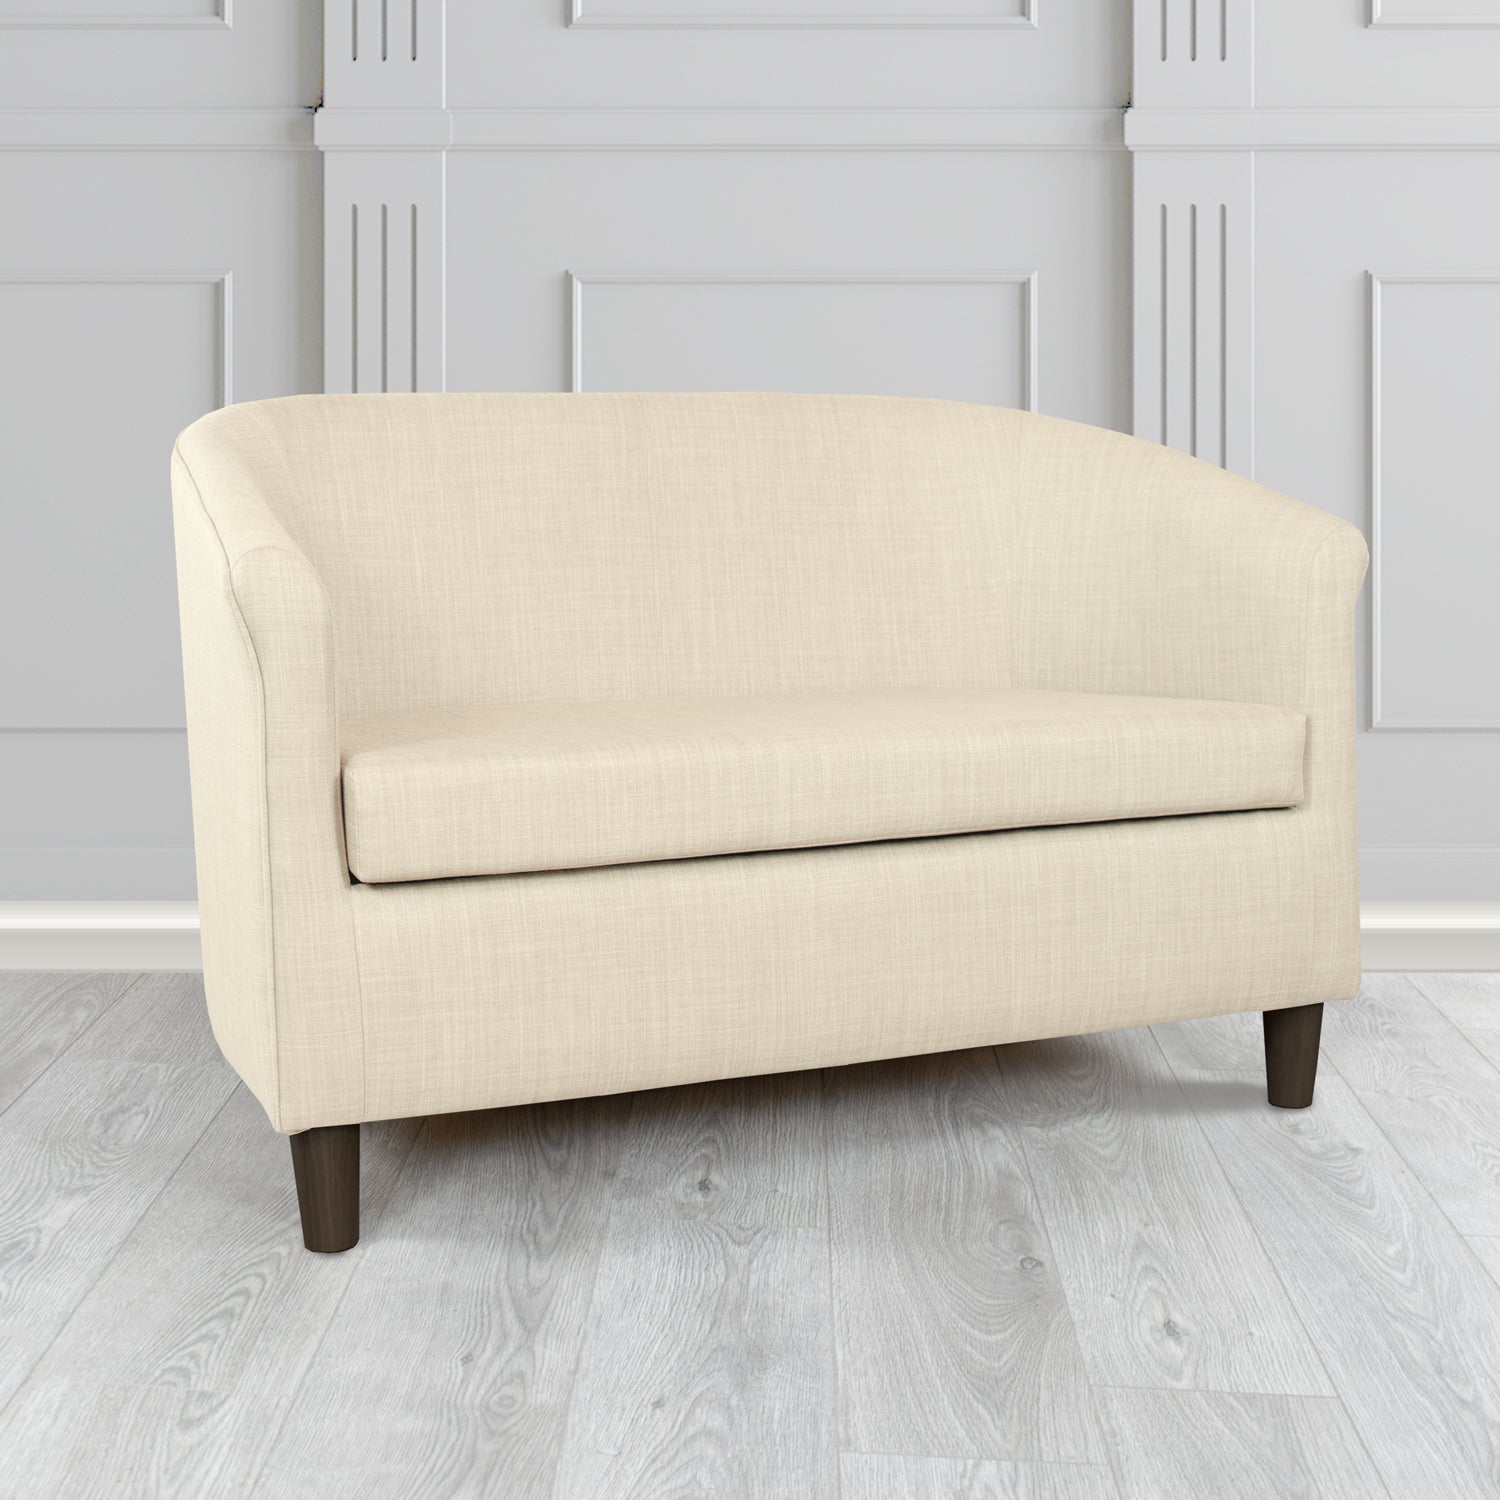 Tuscany Charles Cream Plain Linen Fabric 2 Seater Tub Sofa - The Tub Chair Shop